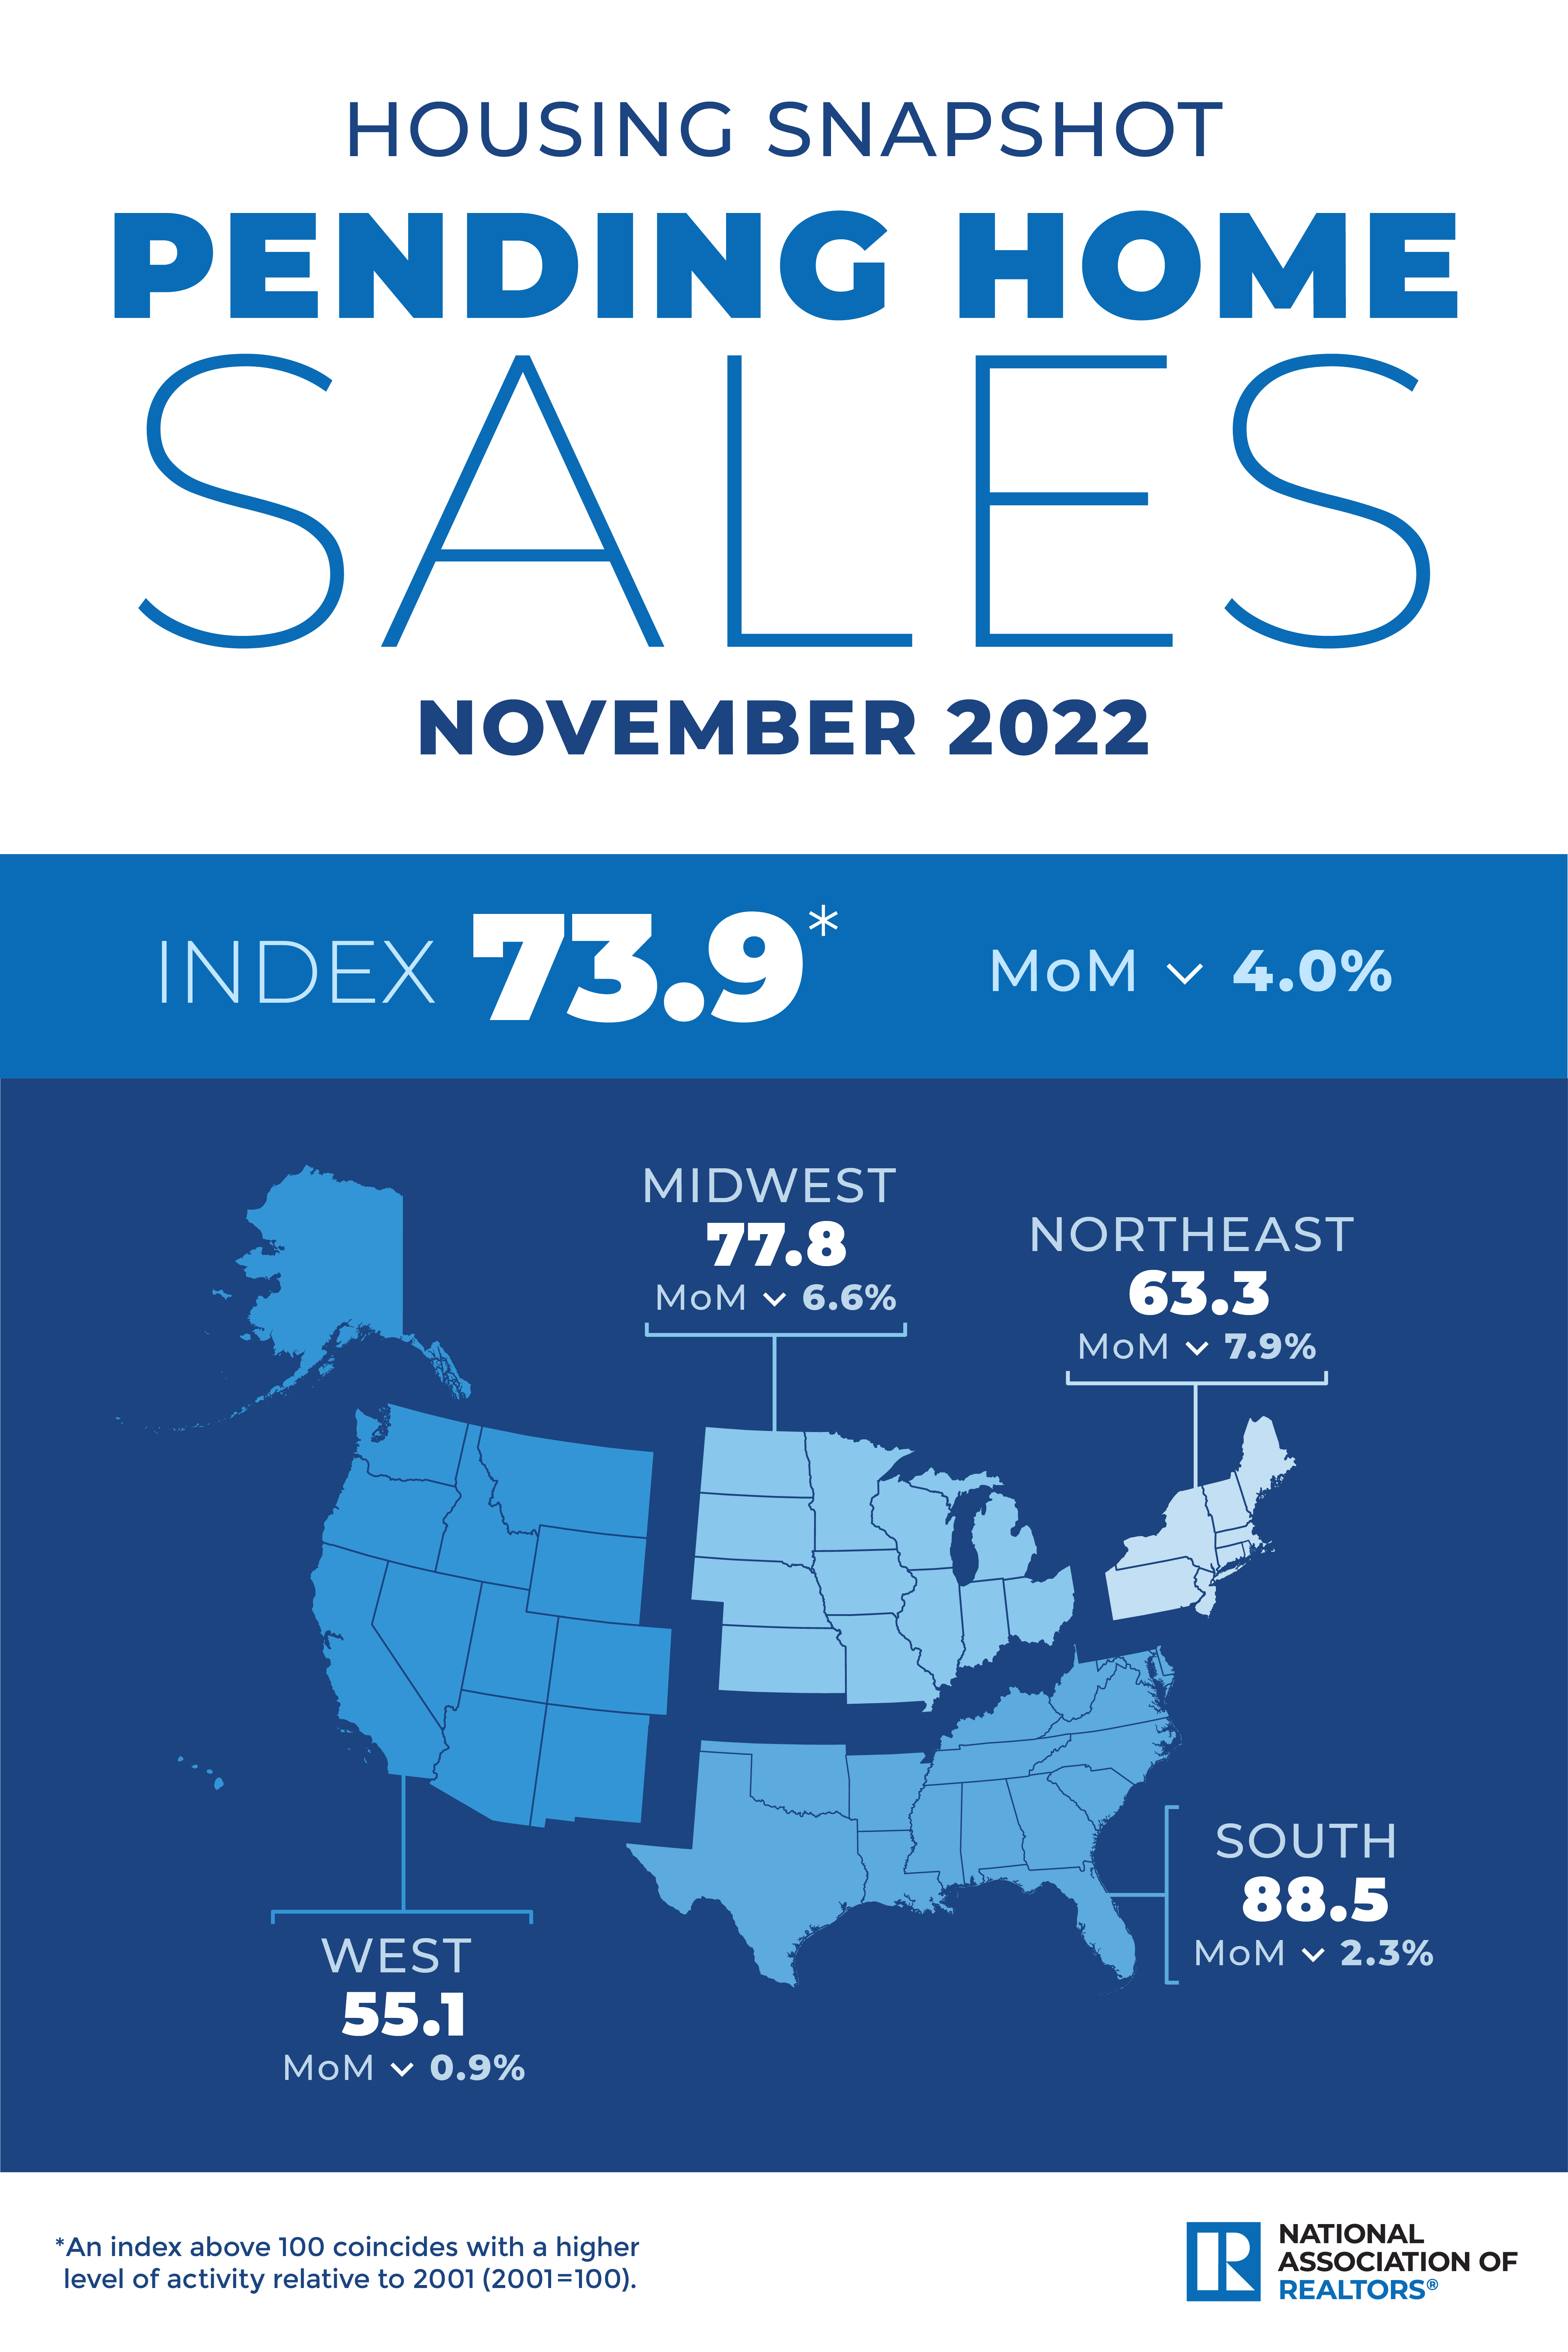 Pending Home Sales: December 2022